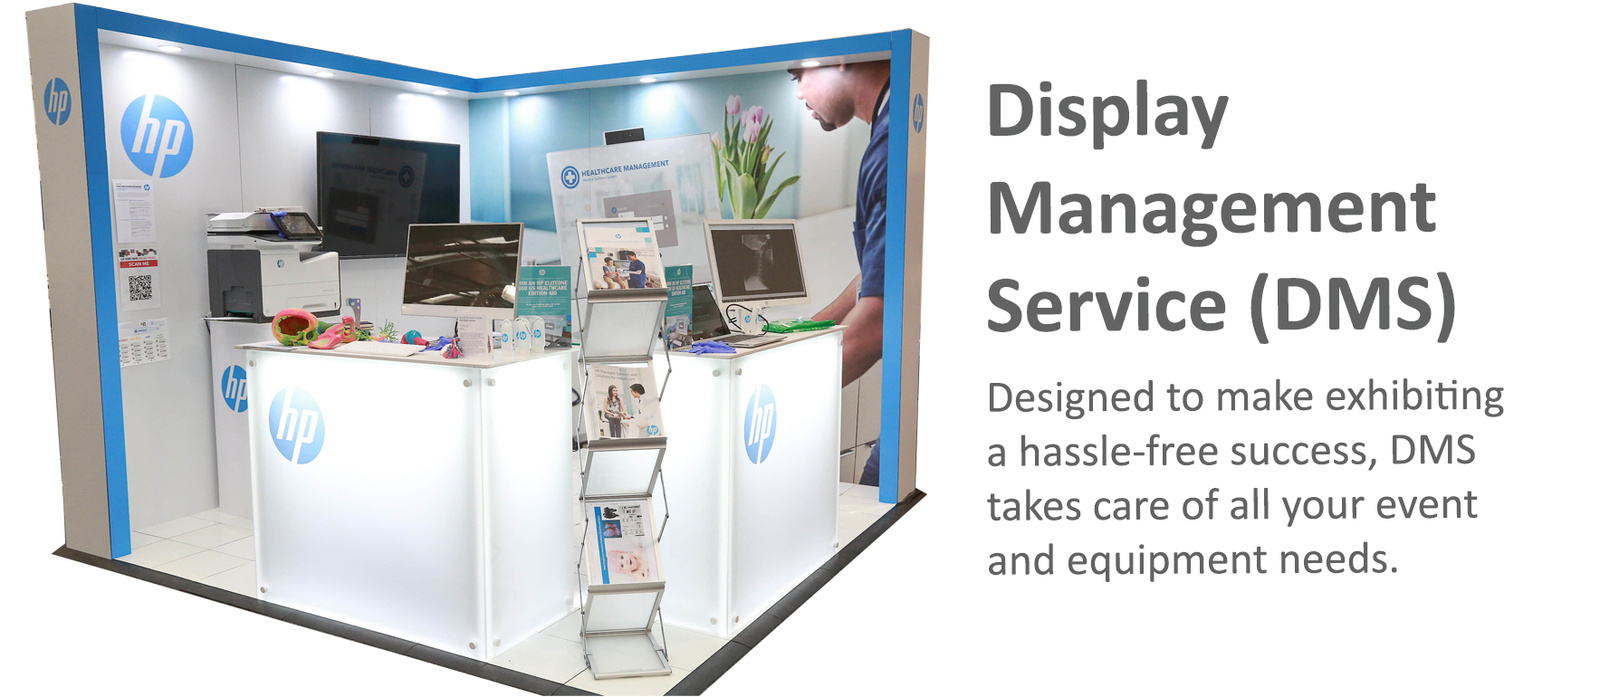 Display Management Service